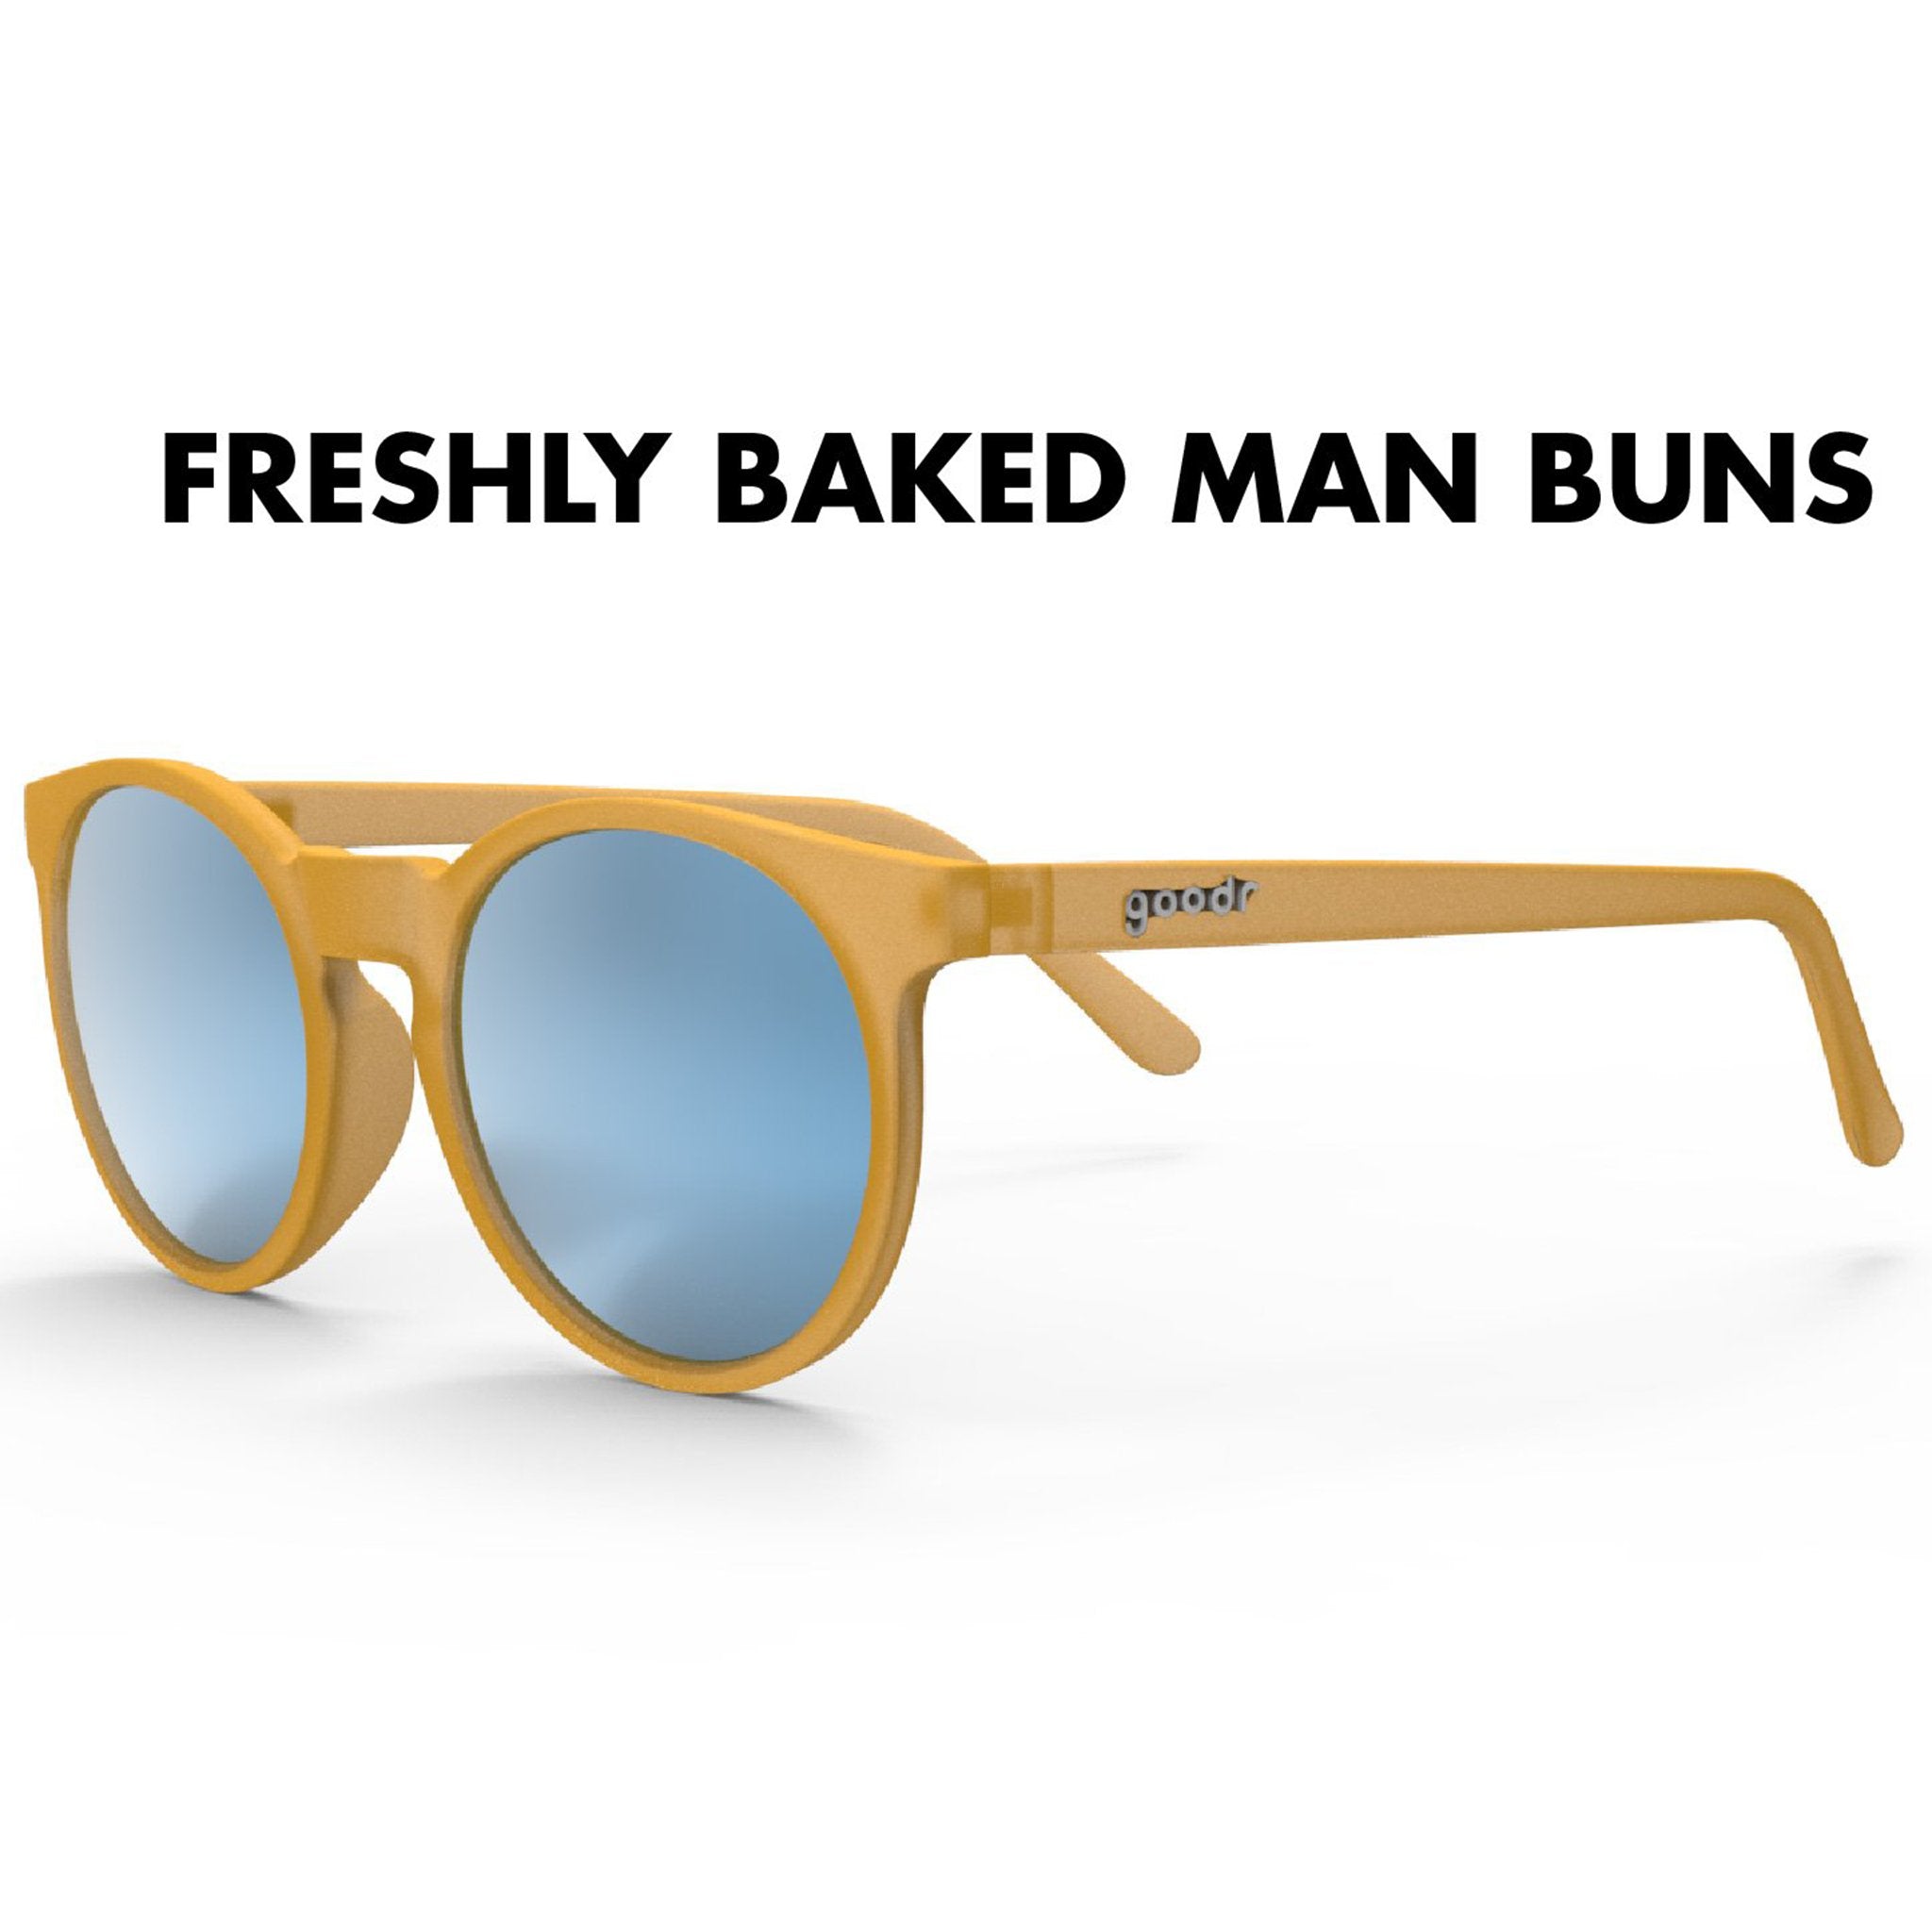 Goodr Sunglasses - Freshly Baked Man Buns - Destination PSP